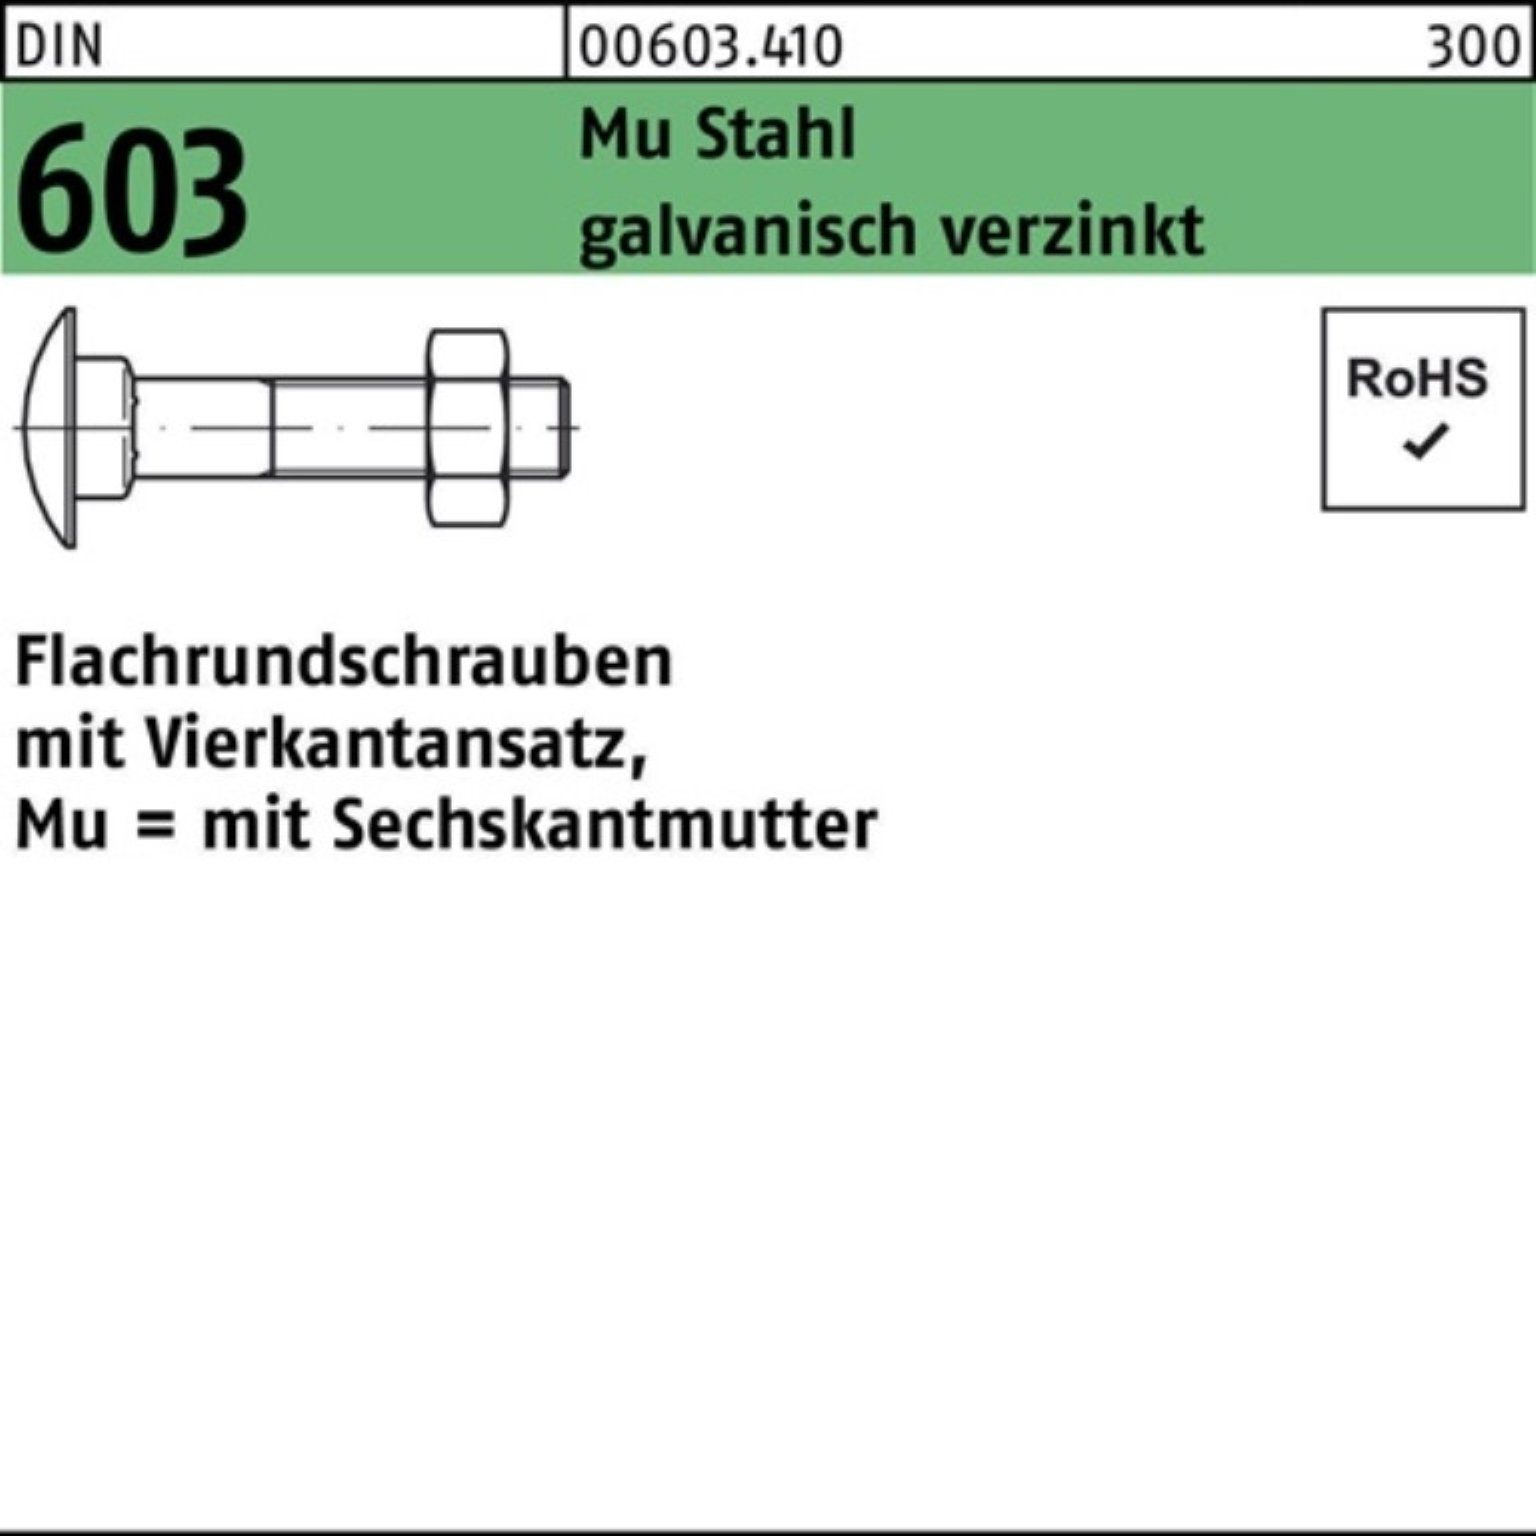 Reyher Vierkantansatz/6-ktmutter Flachrundschraube Schraube 100er 603 Pack DIN M6x120